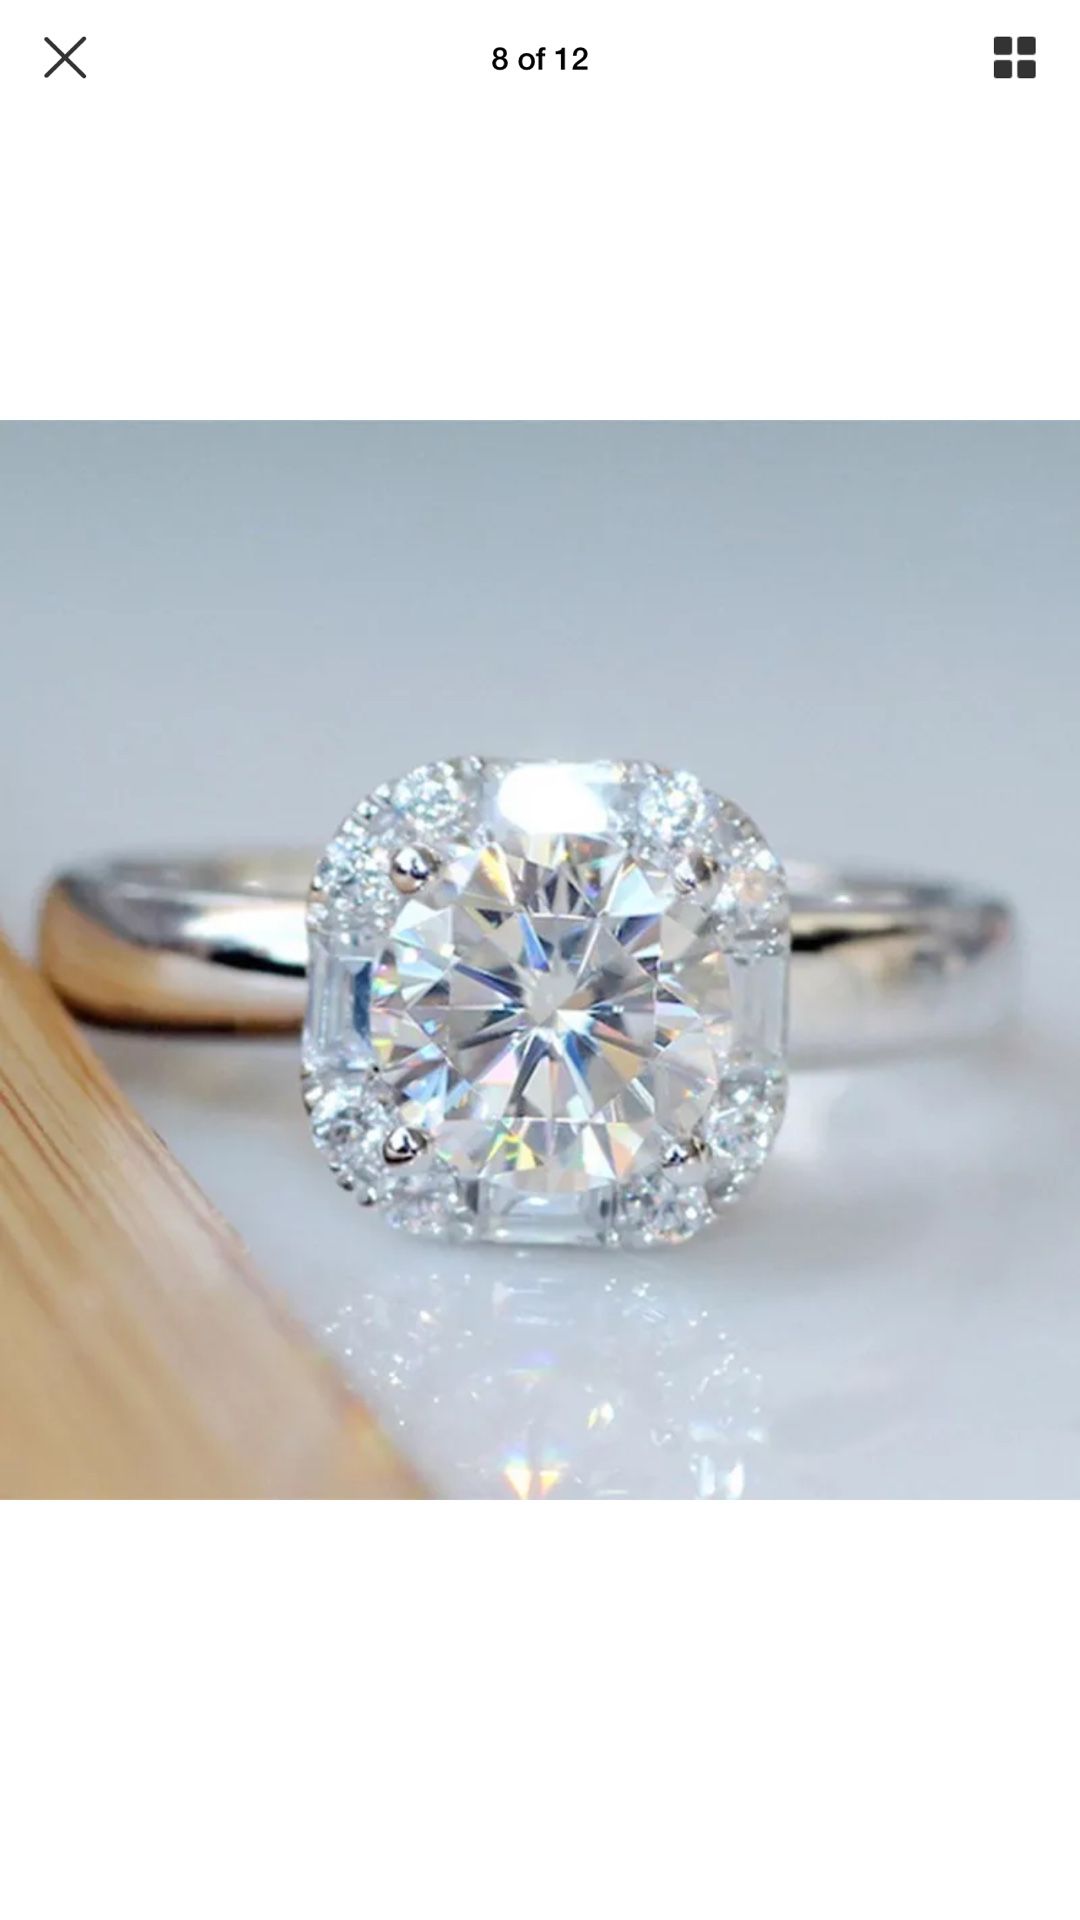 1ct lab created diamond love ring women’s jewelry accessory Christmas gift